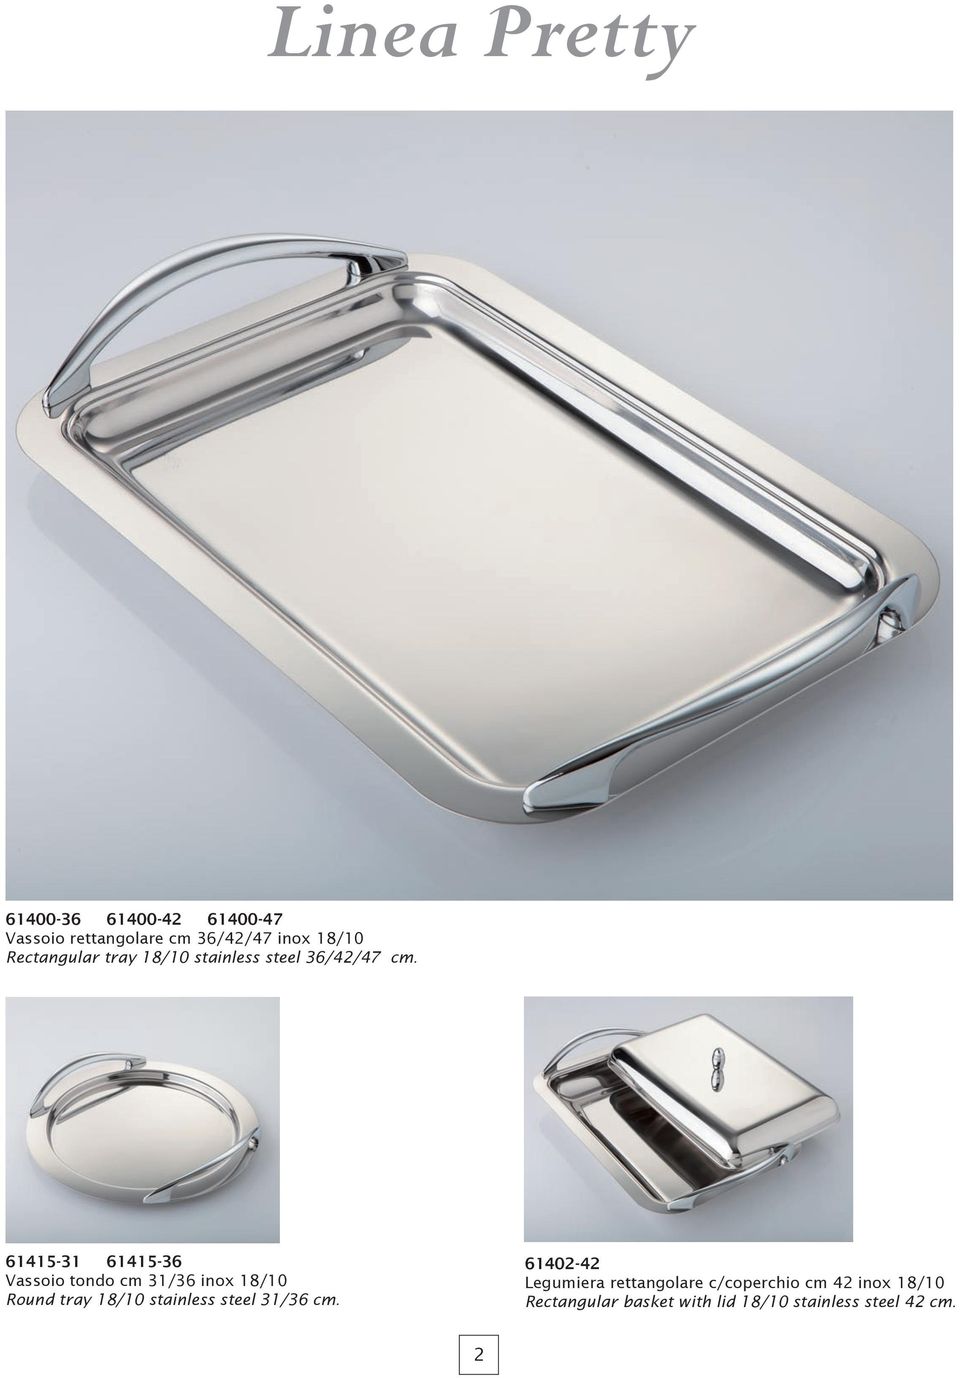 61415-31 61415-36 Vassoio tondo cm 31/36 inox 18/10 Round tray 18/10 stainless steel